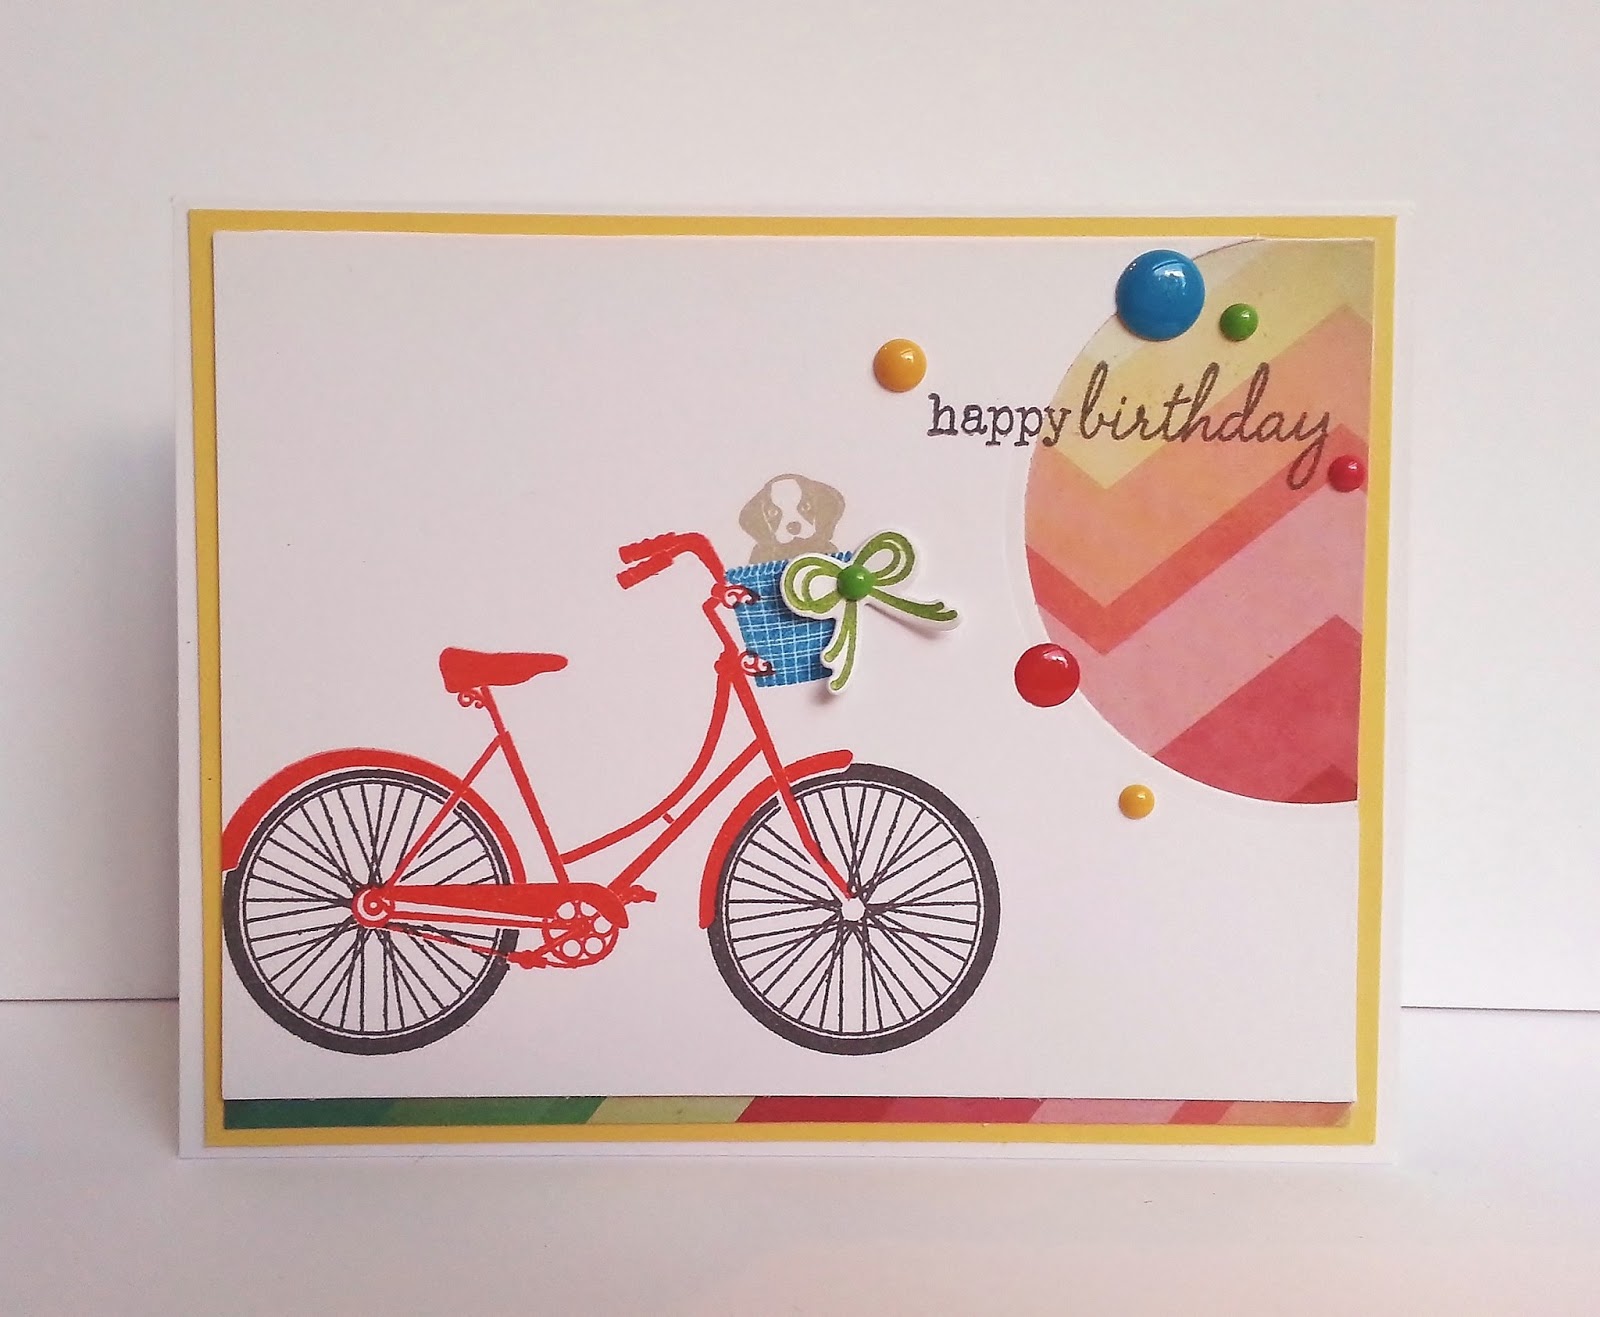 https://blogger.googleusercontent.com/img/b/R29vZ2xl/AVvXsEhO9u-d_sv_QjkdIeZs4Nk3kZRc4DTfphPecRAJ0fUvngF9bFUtTJ7rM8udqoNxBHbSk709rJ8JVHthSSBzS0P3pQaduqPfjSMvBffXolzkl9deLj7oWyphy9Fsc-ibJDalYdaEknjZ8Ag/s1600/Birthday+Bike+1.jpg